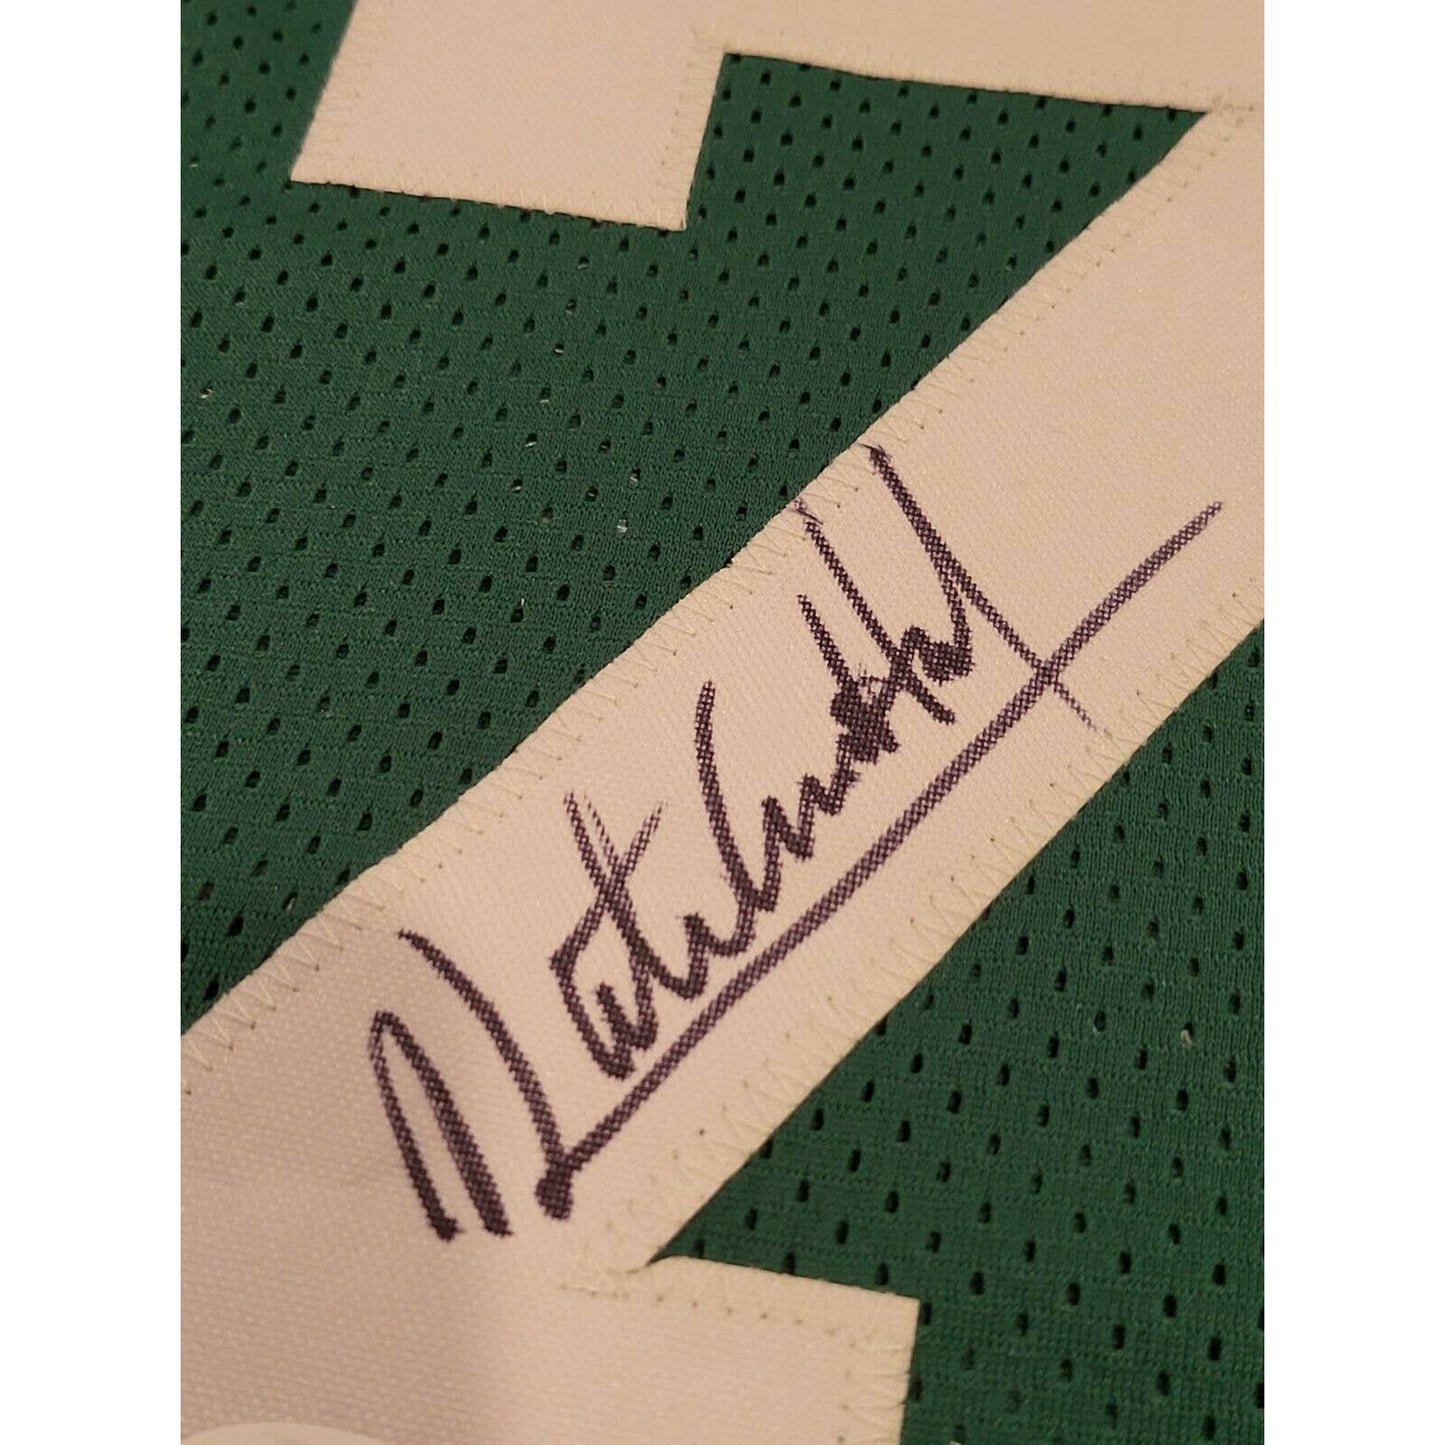 Nate Archibald Autographed/Signed Jersey JSA COA Boston Celtics Tiny Nate - TreasuresEvolved